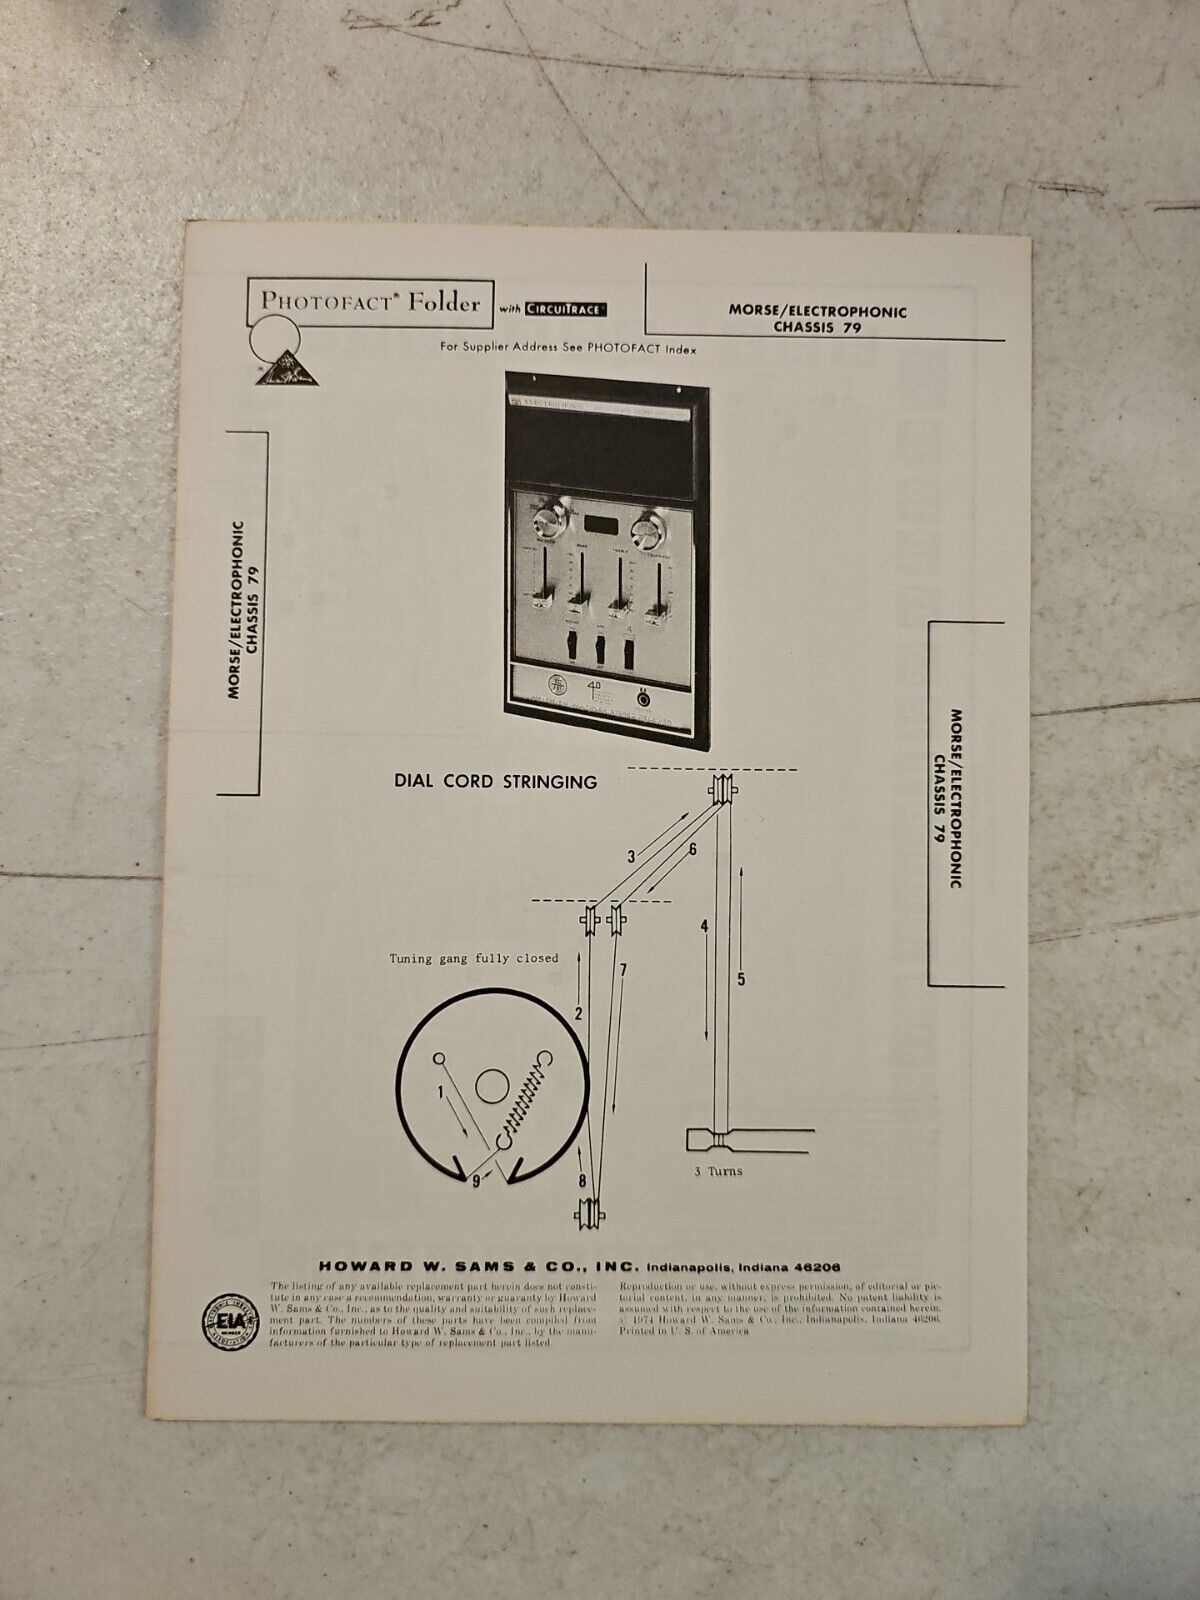 SAMS Vintage Photofact Folder Document Manual morse/electrophonic Chassis 79